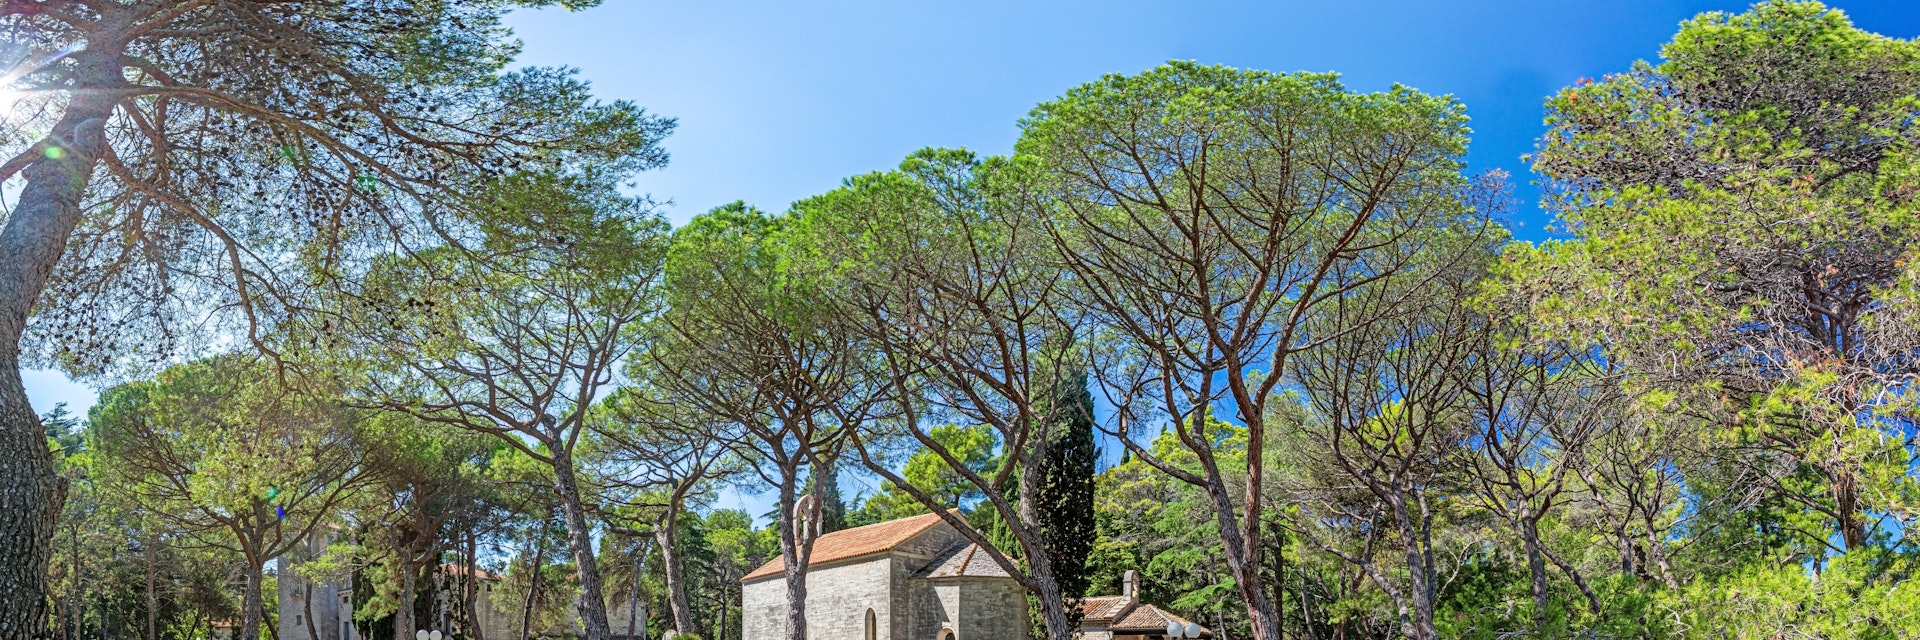 Picture of the Basilika Crkva Sv. Germana on the Croatian island of Brijuni during daytime in summer